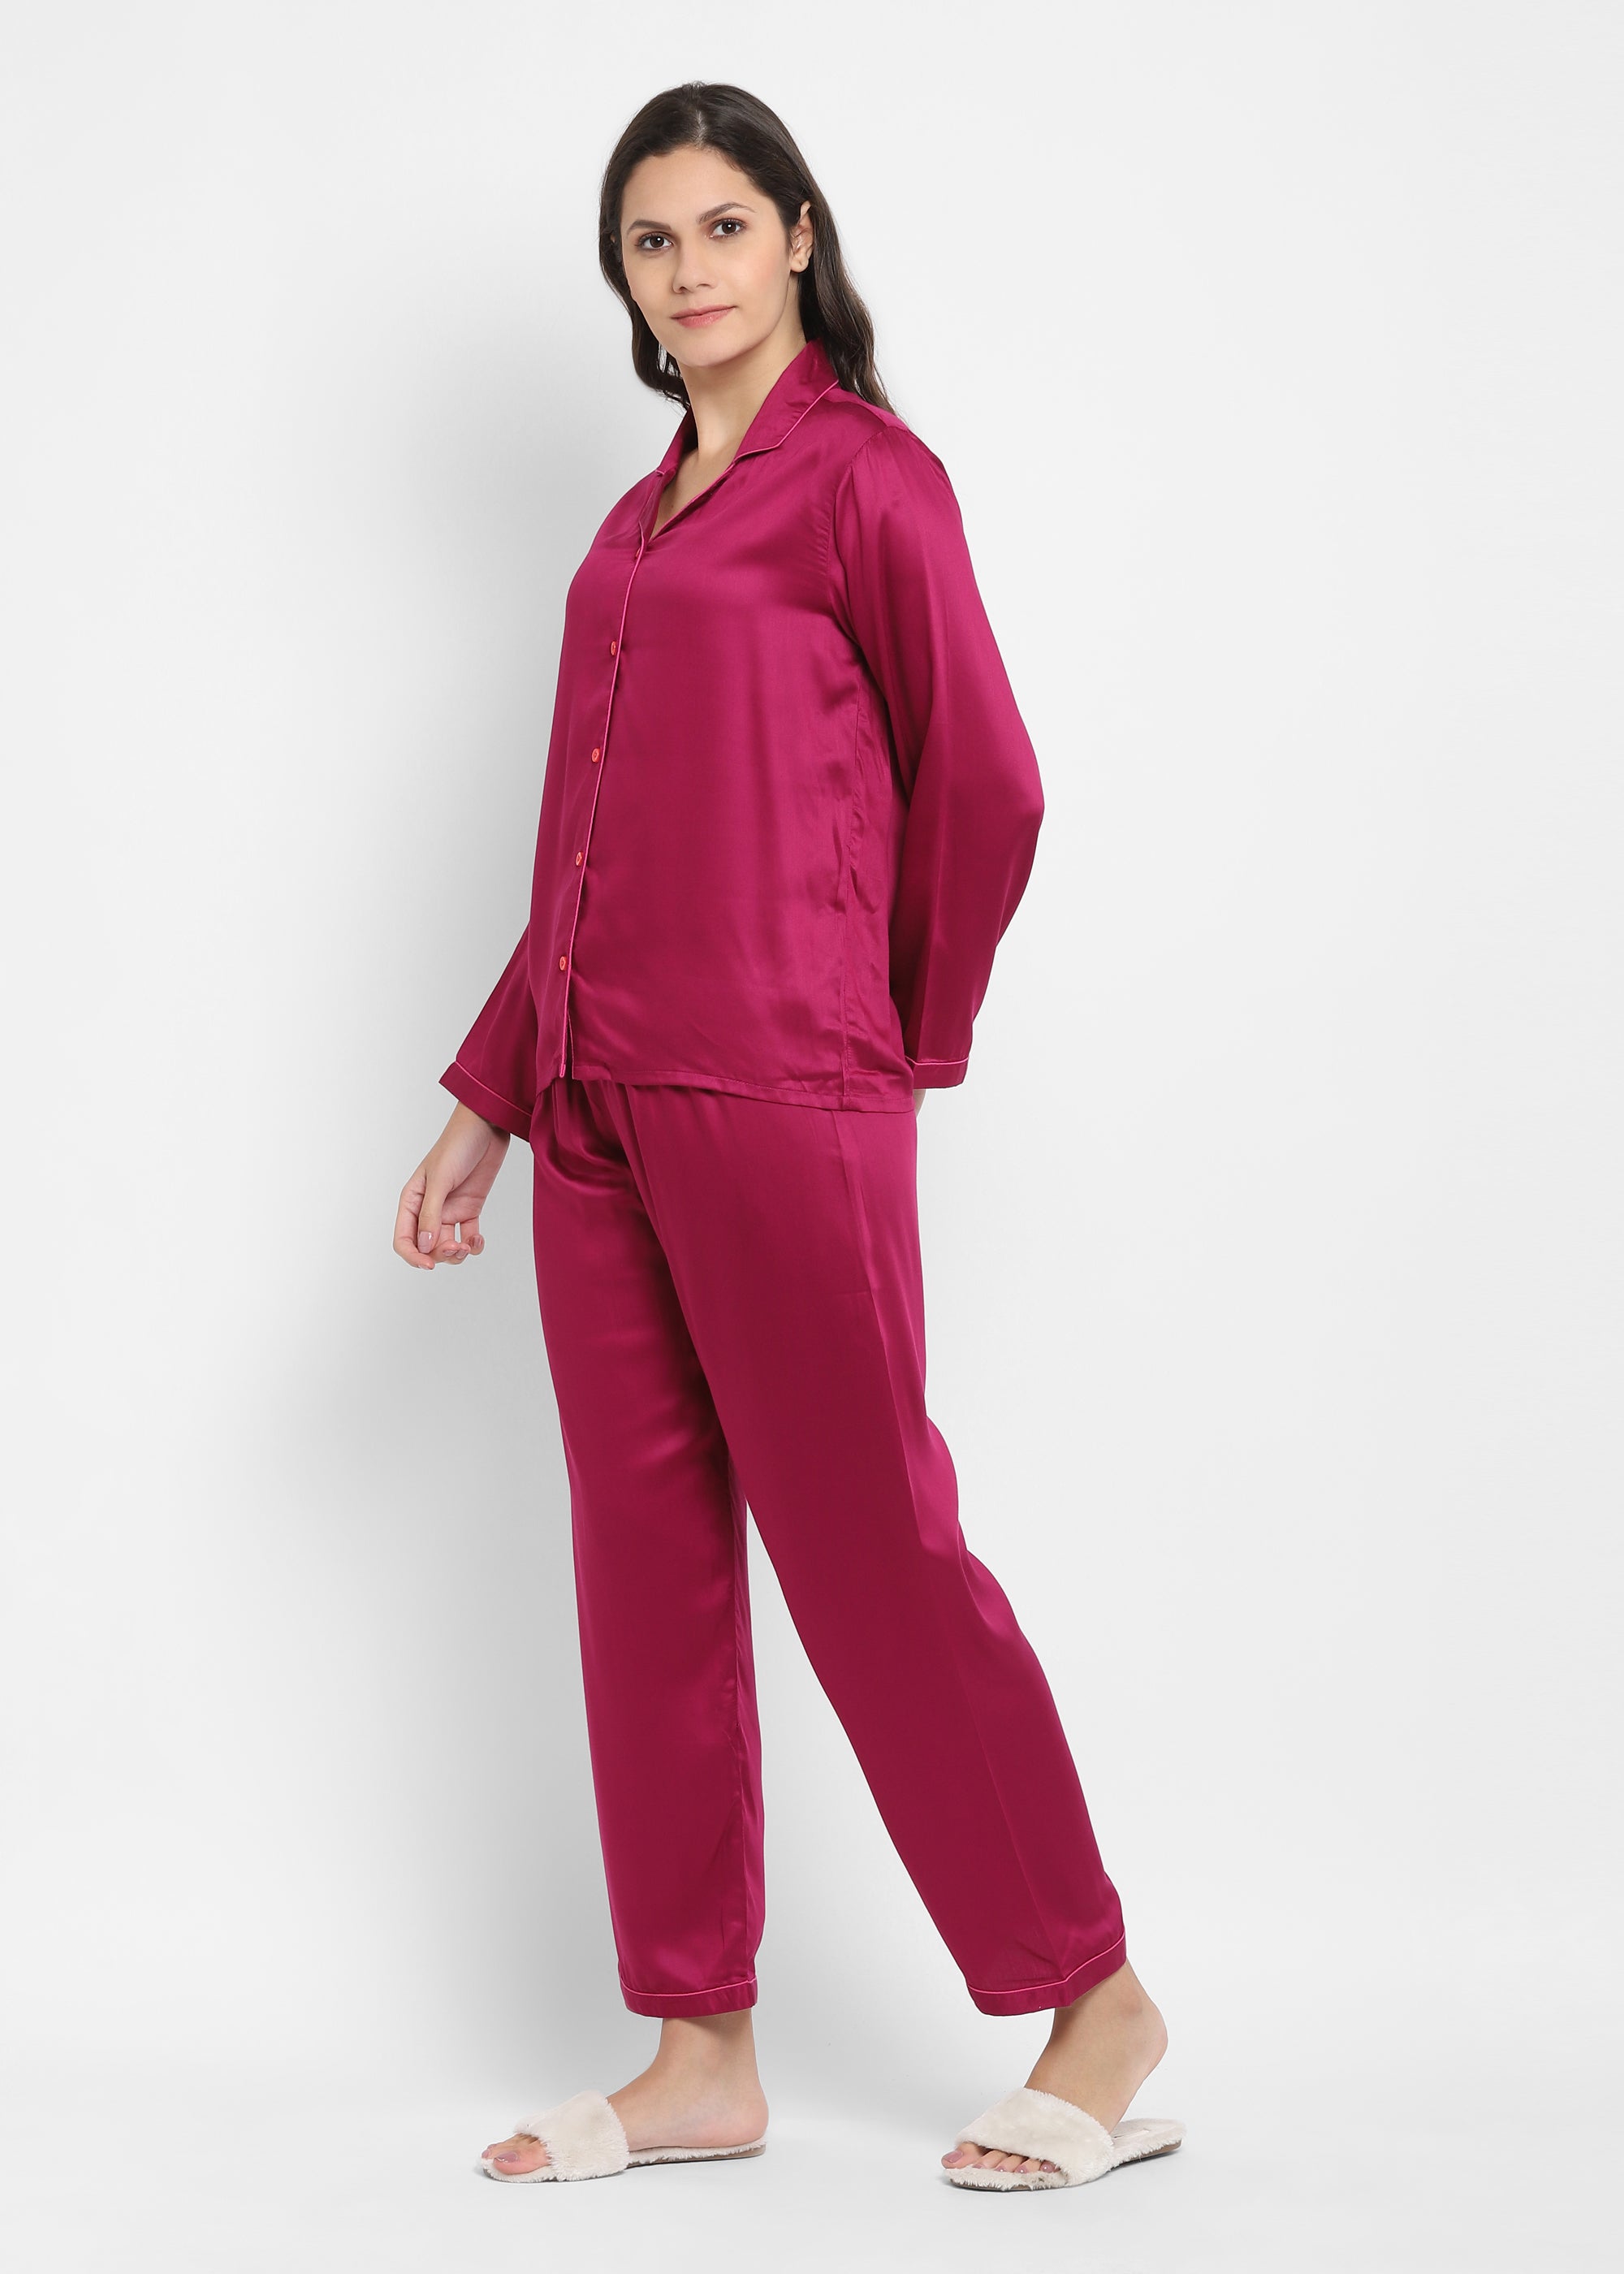 Ultra Soft Magenta Modal Satin Long Sleeve Women's Night Suit - Shopbloom